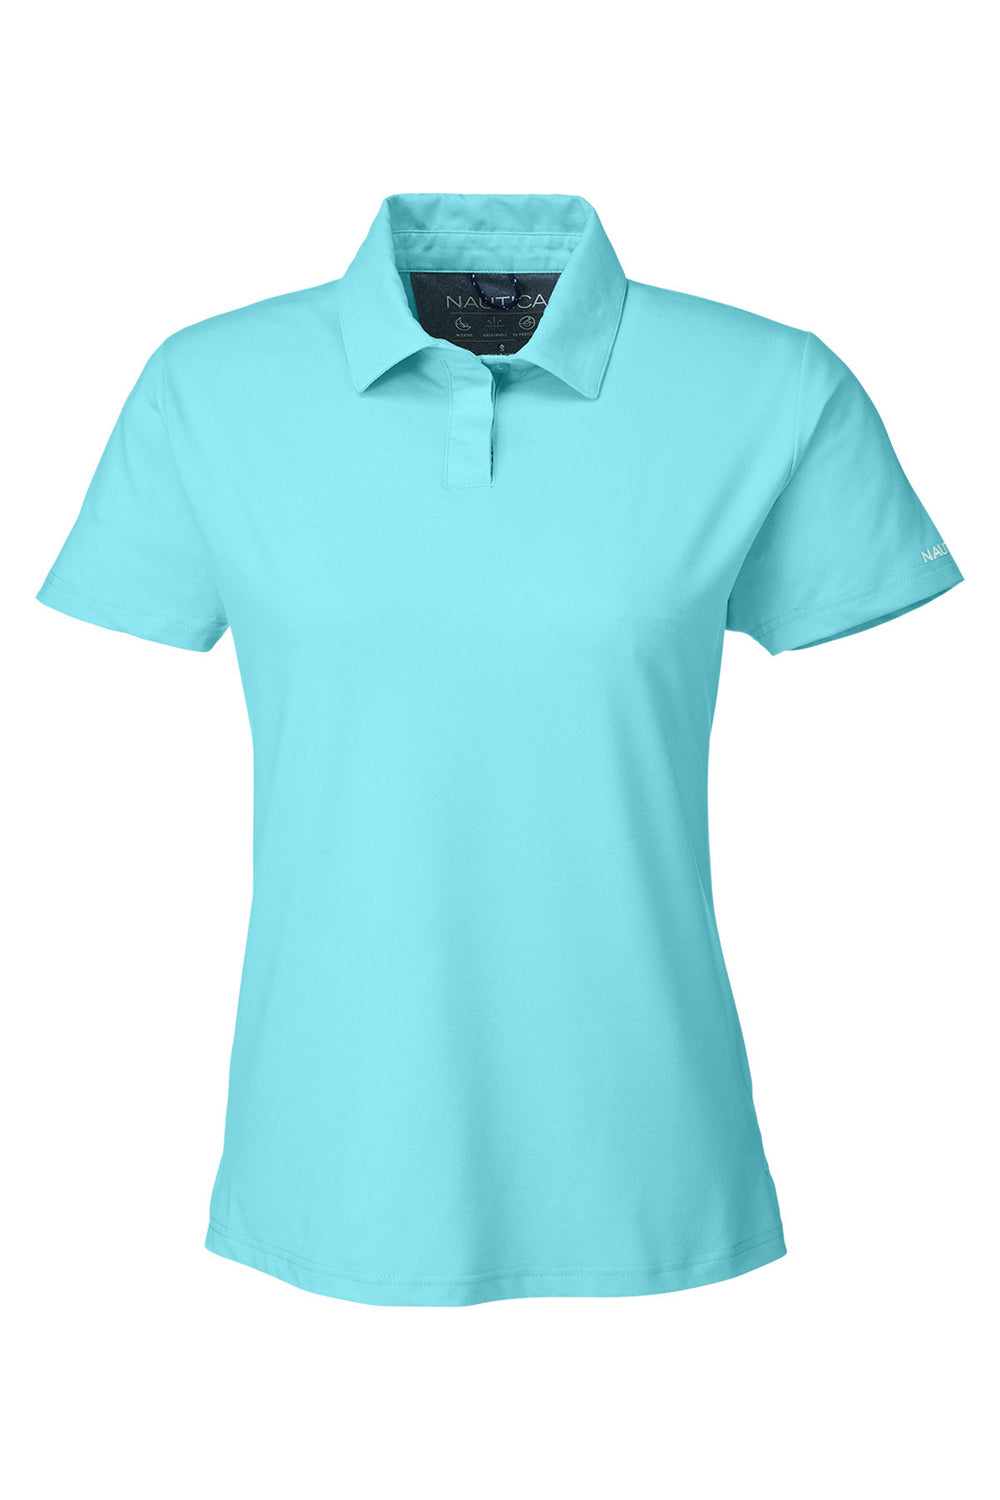 Nautica N17923 Womens Saltwater Short Sleeve Polo Shirt Sea Mist Blue Flat Front